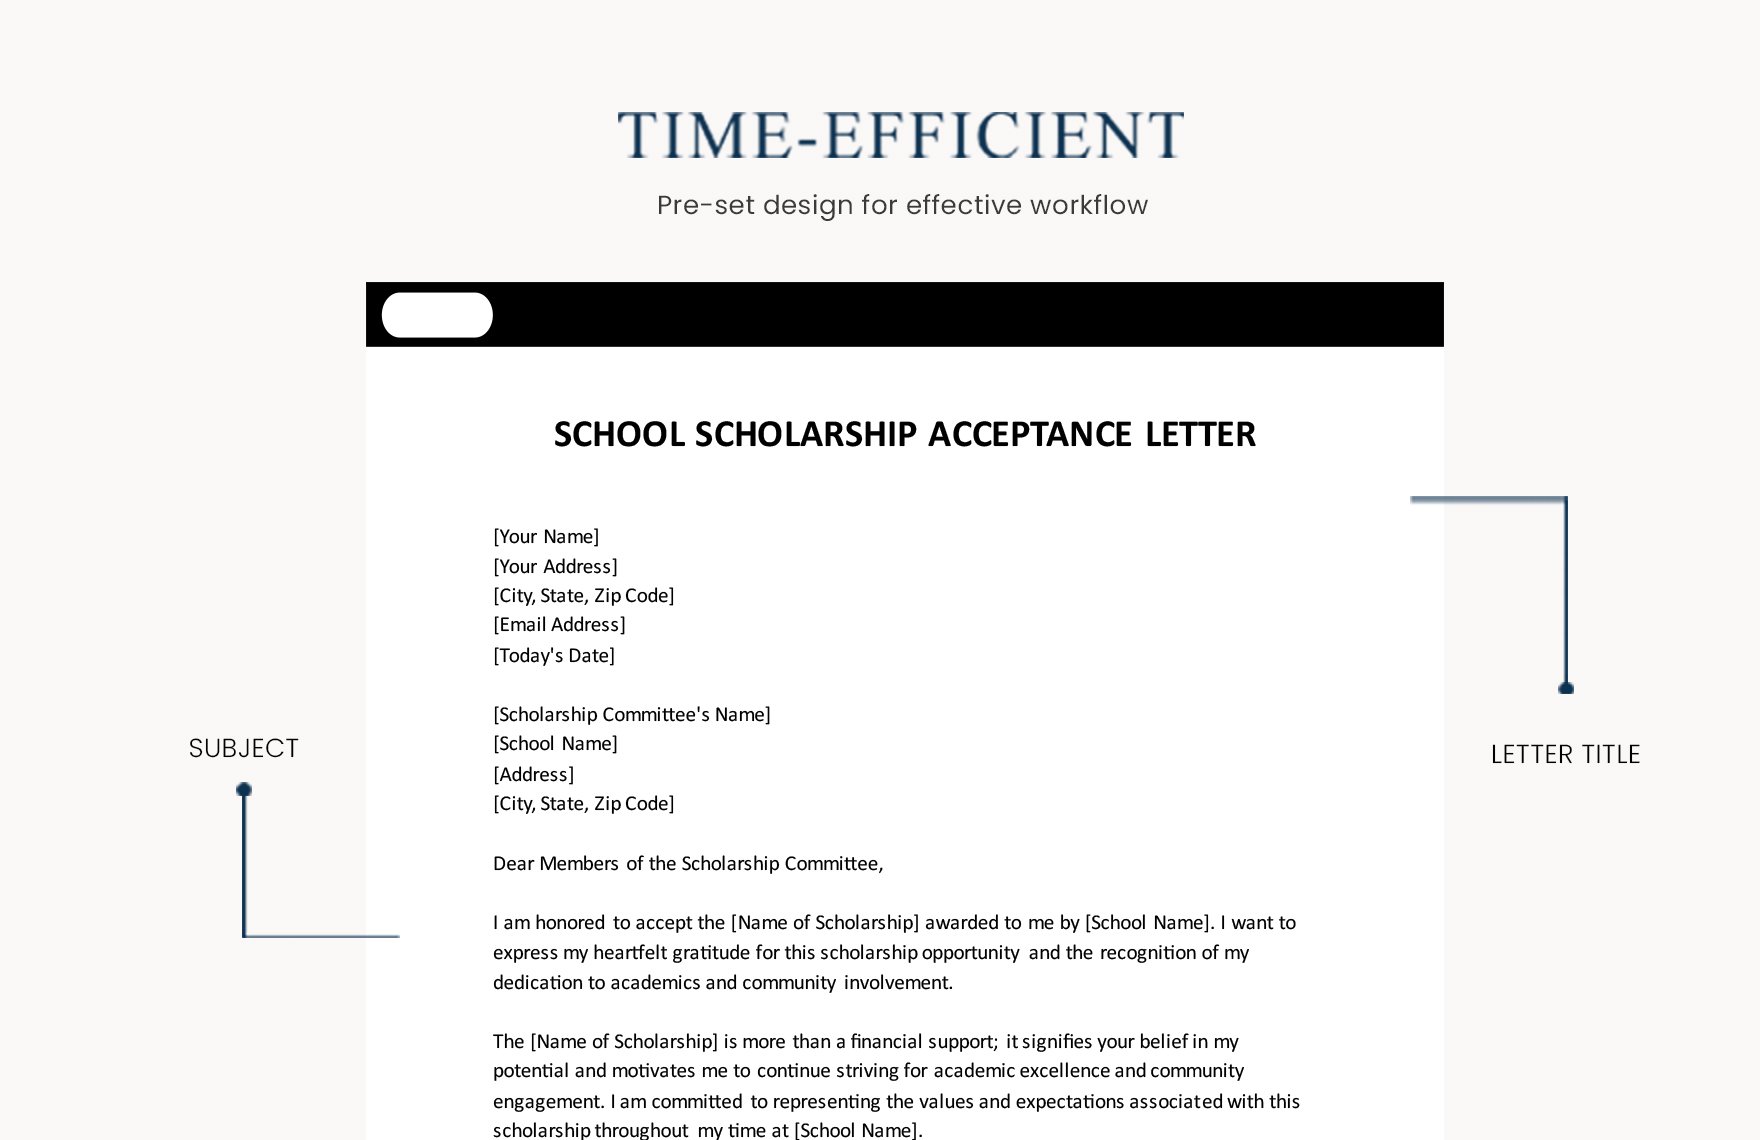 School Scholarship Acceptance Letter